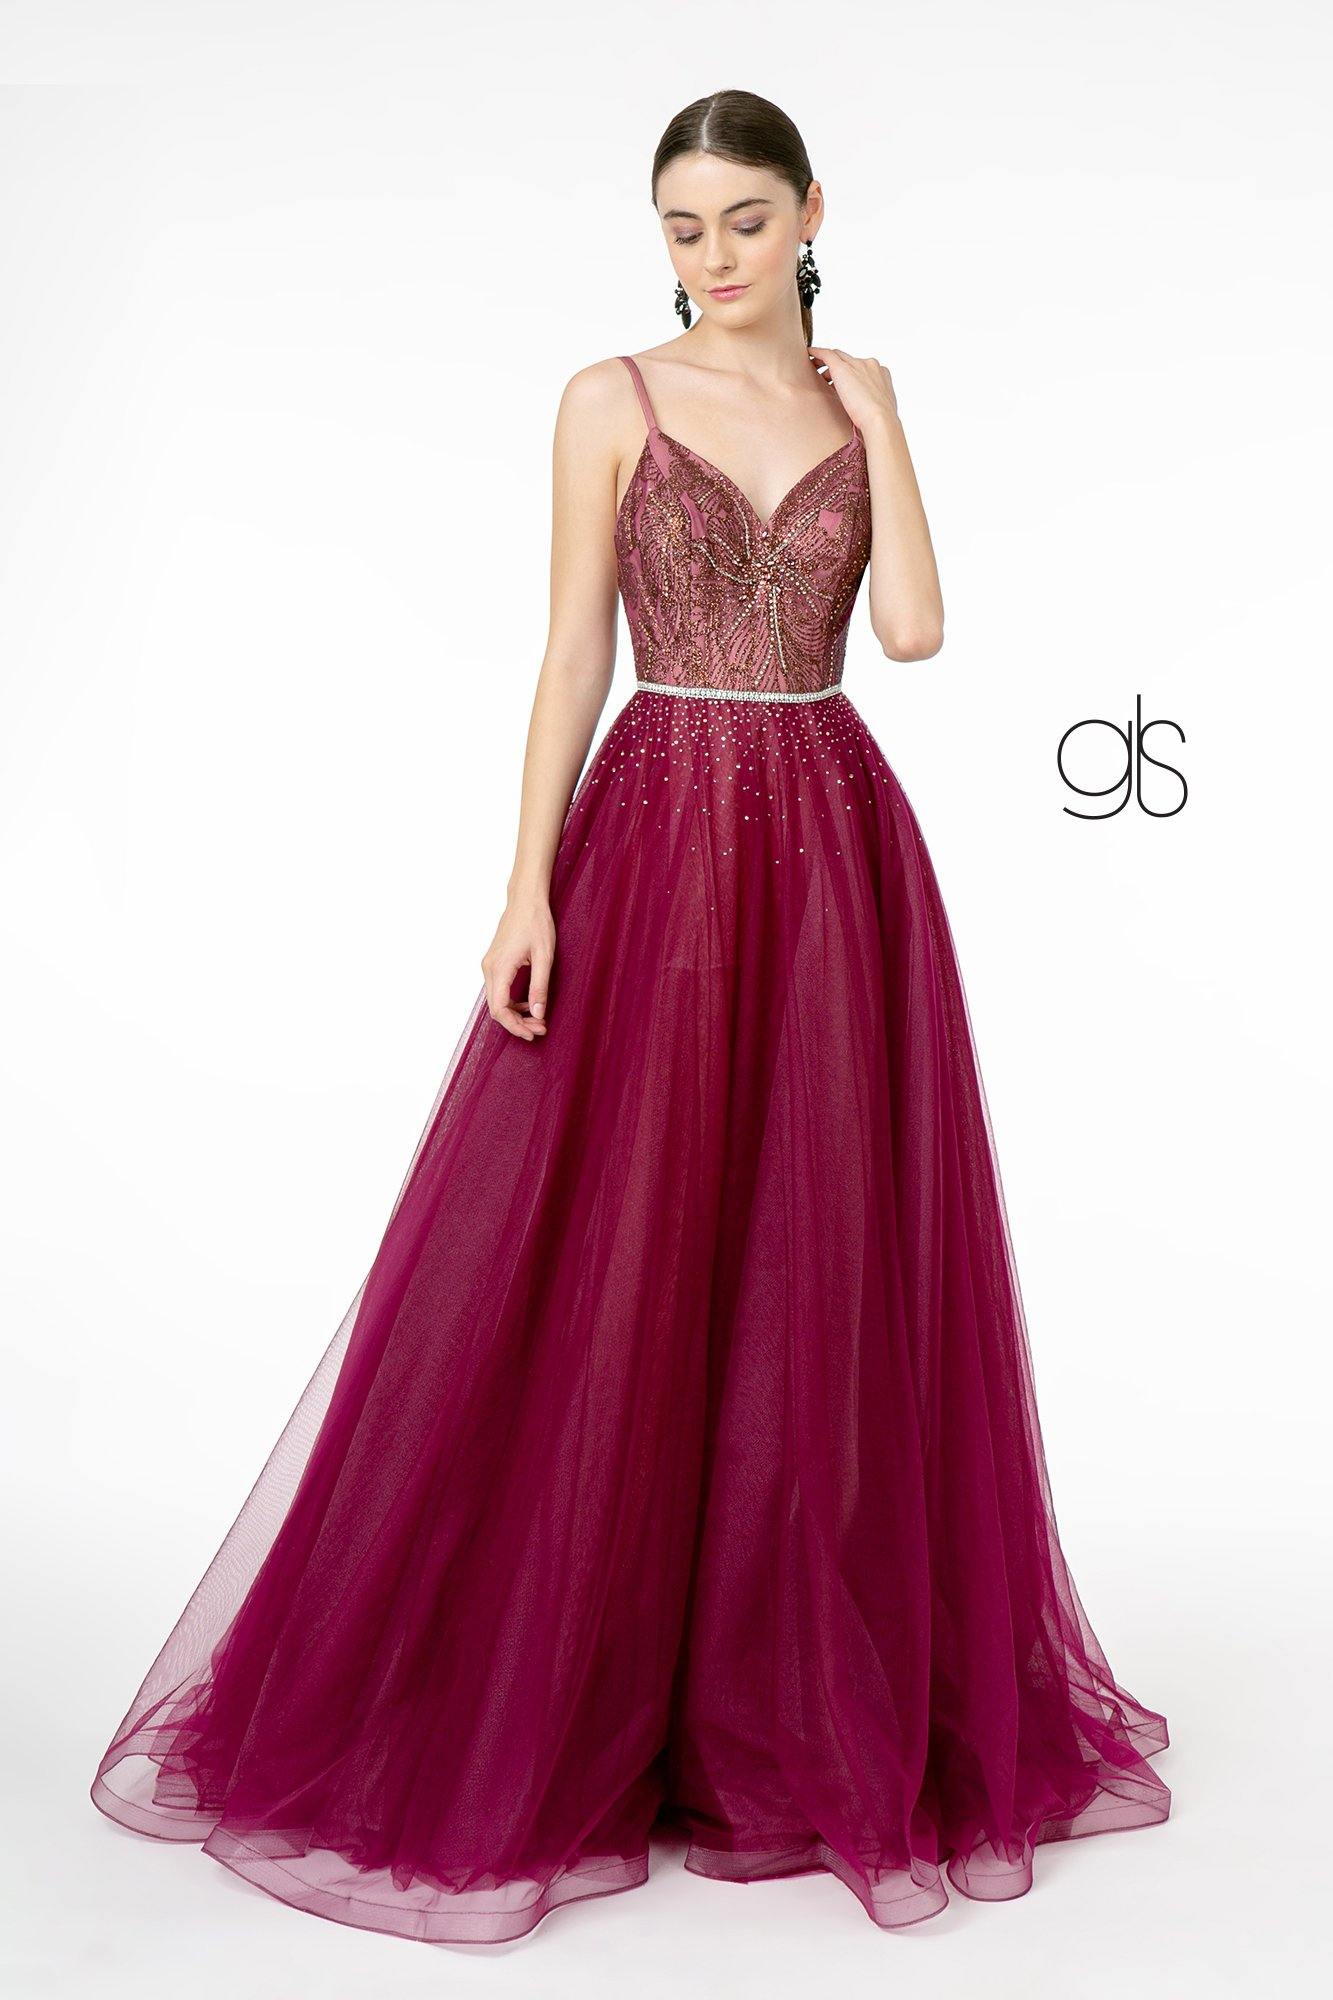 Gliiter Mesh A-Line Long Prom Dress - The Dress Outlet Elizabeth K